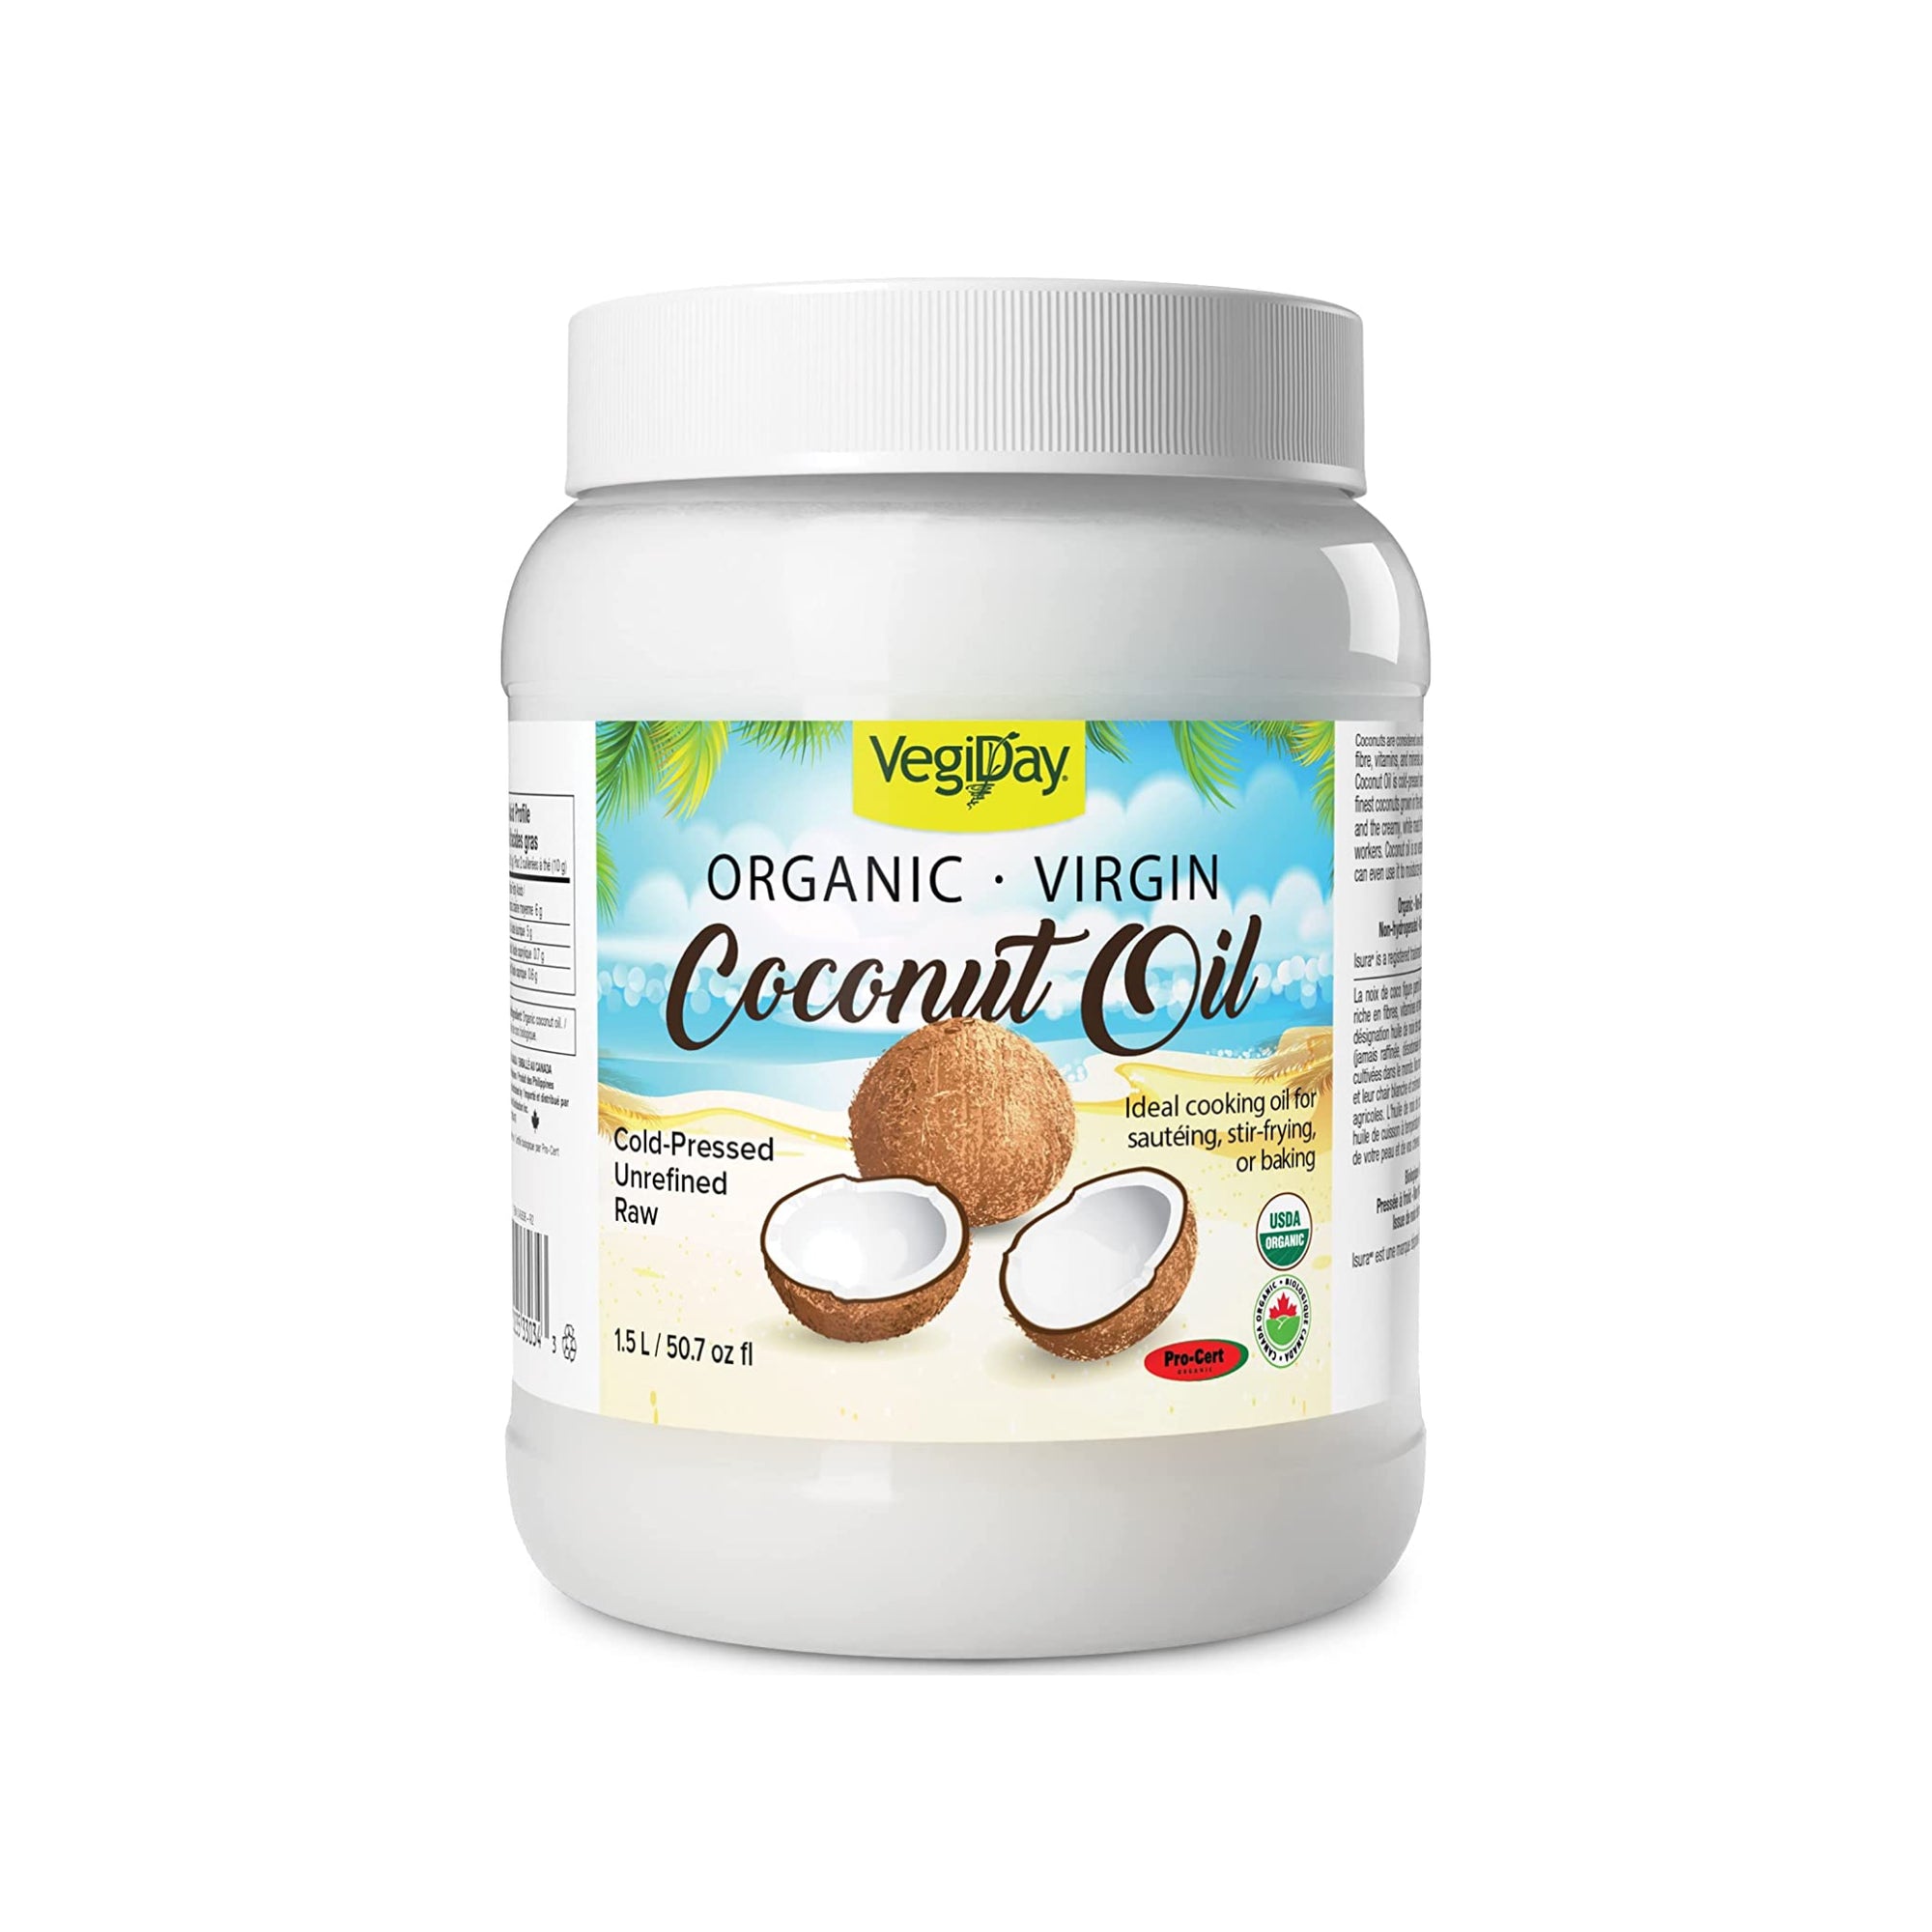 VegiDay Organic Virgin Coconut Oil 1.5L